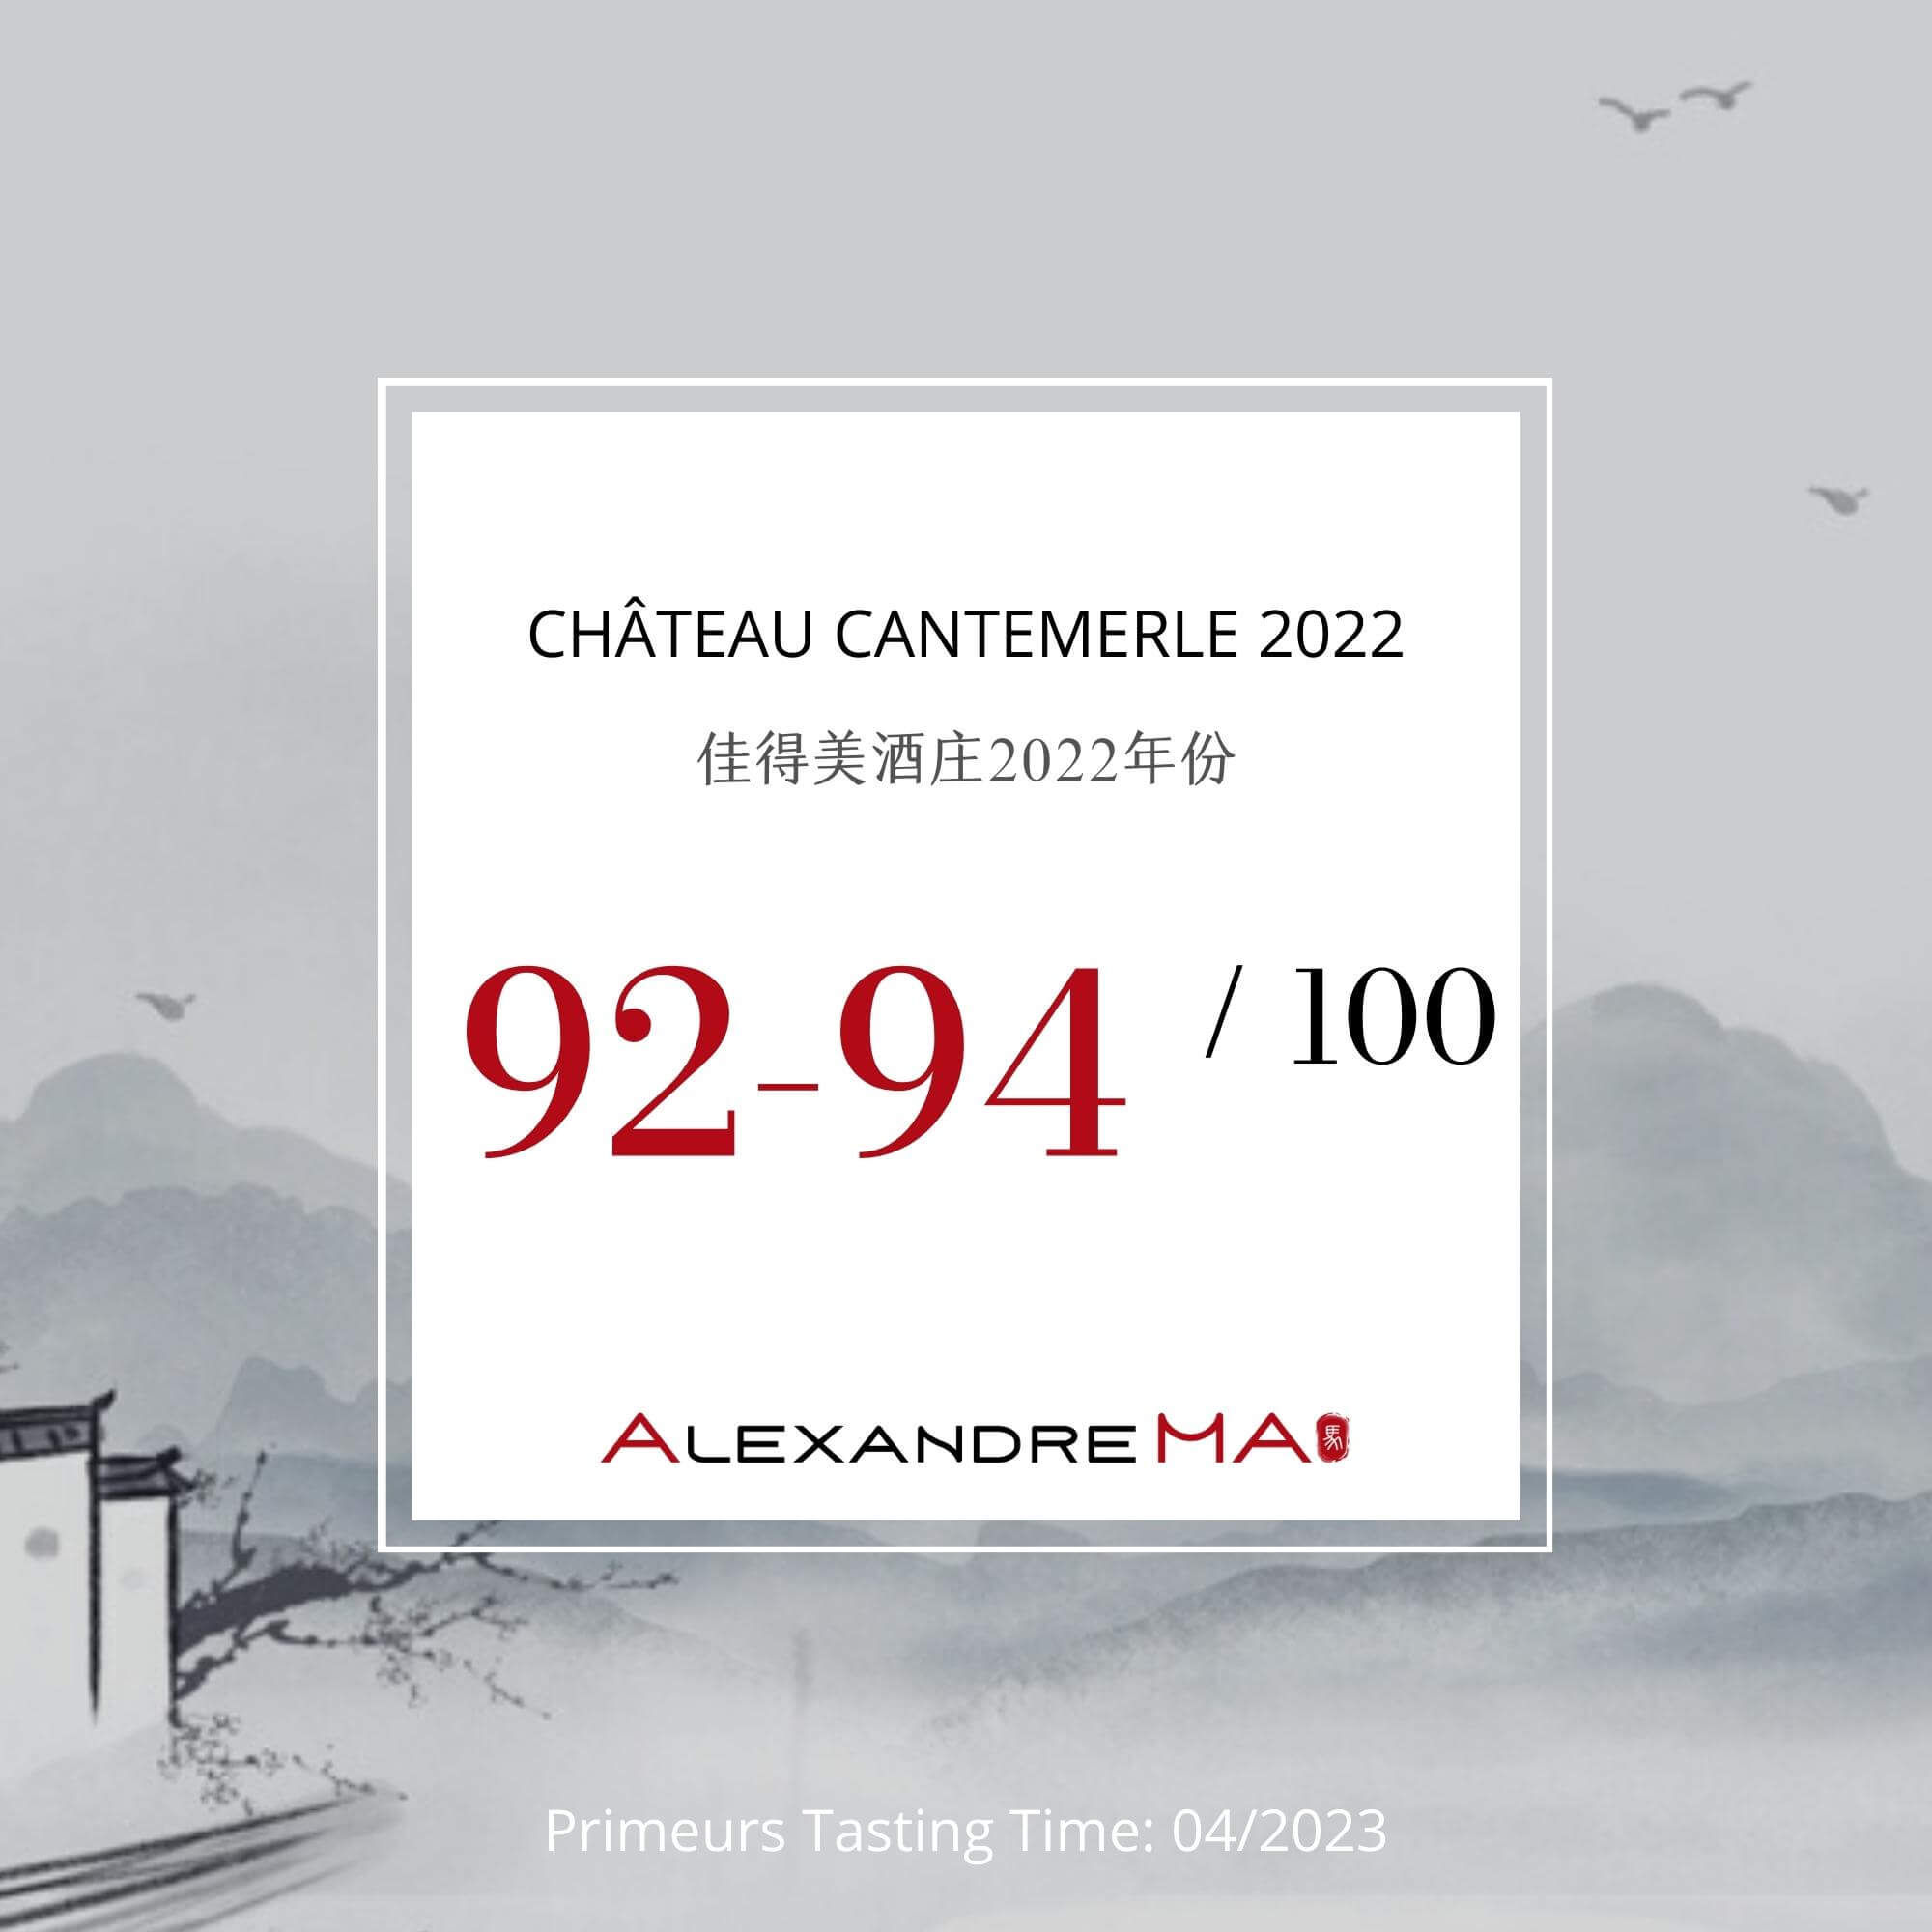 Château Cantemerle 2022 Primeurs - Alexandre MA